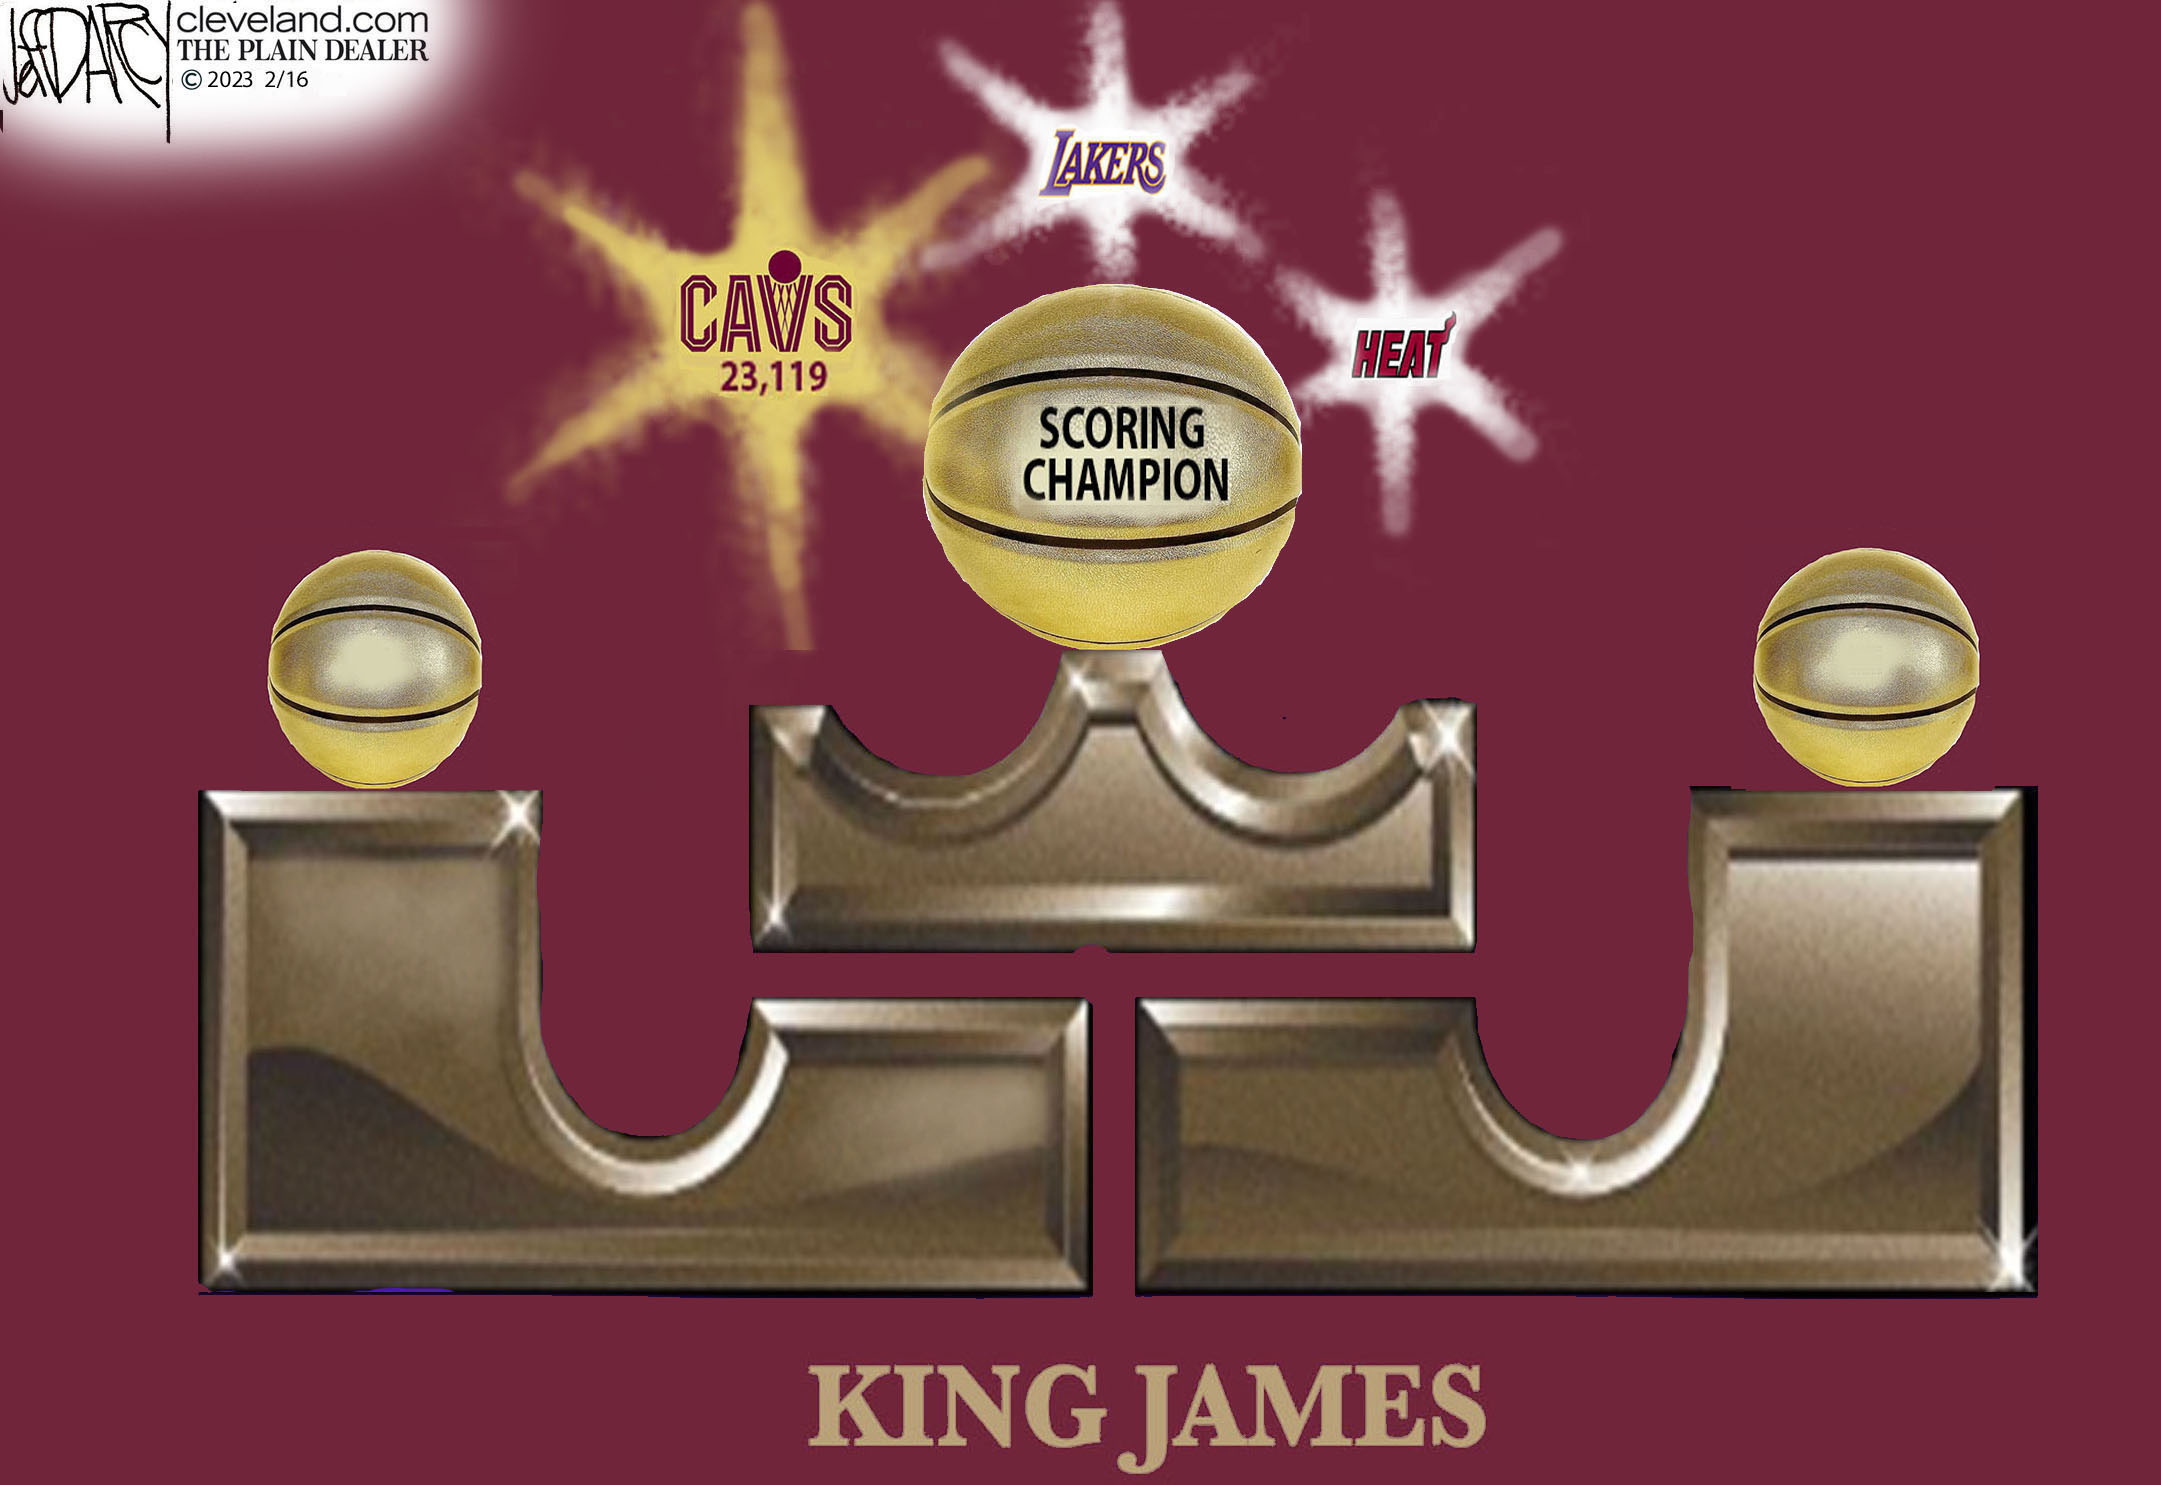 LeBron's new crown jewel: Darcy cartoon 